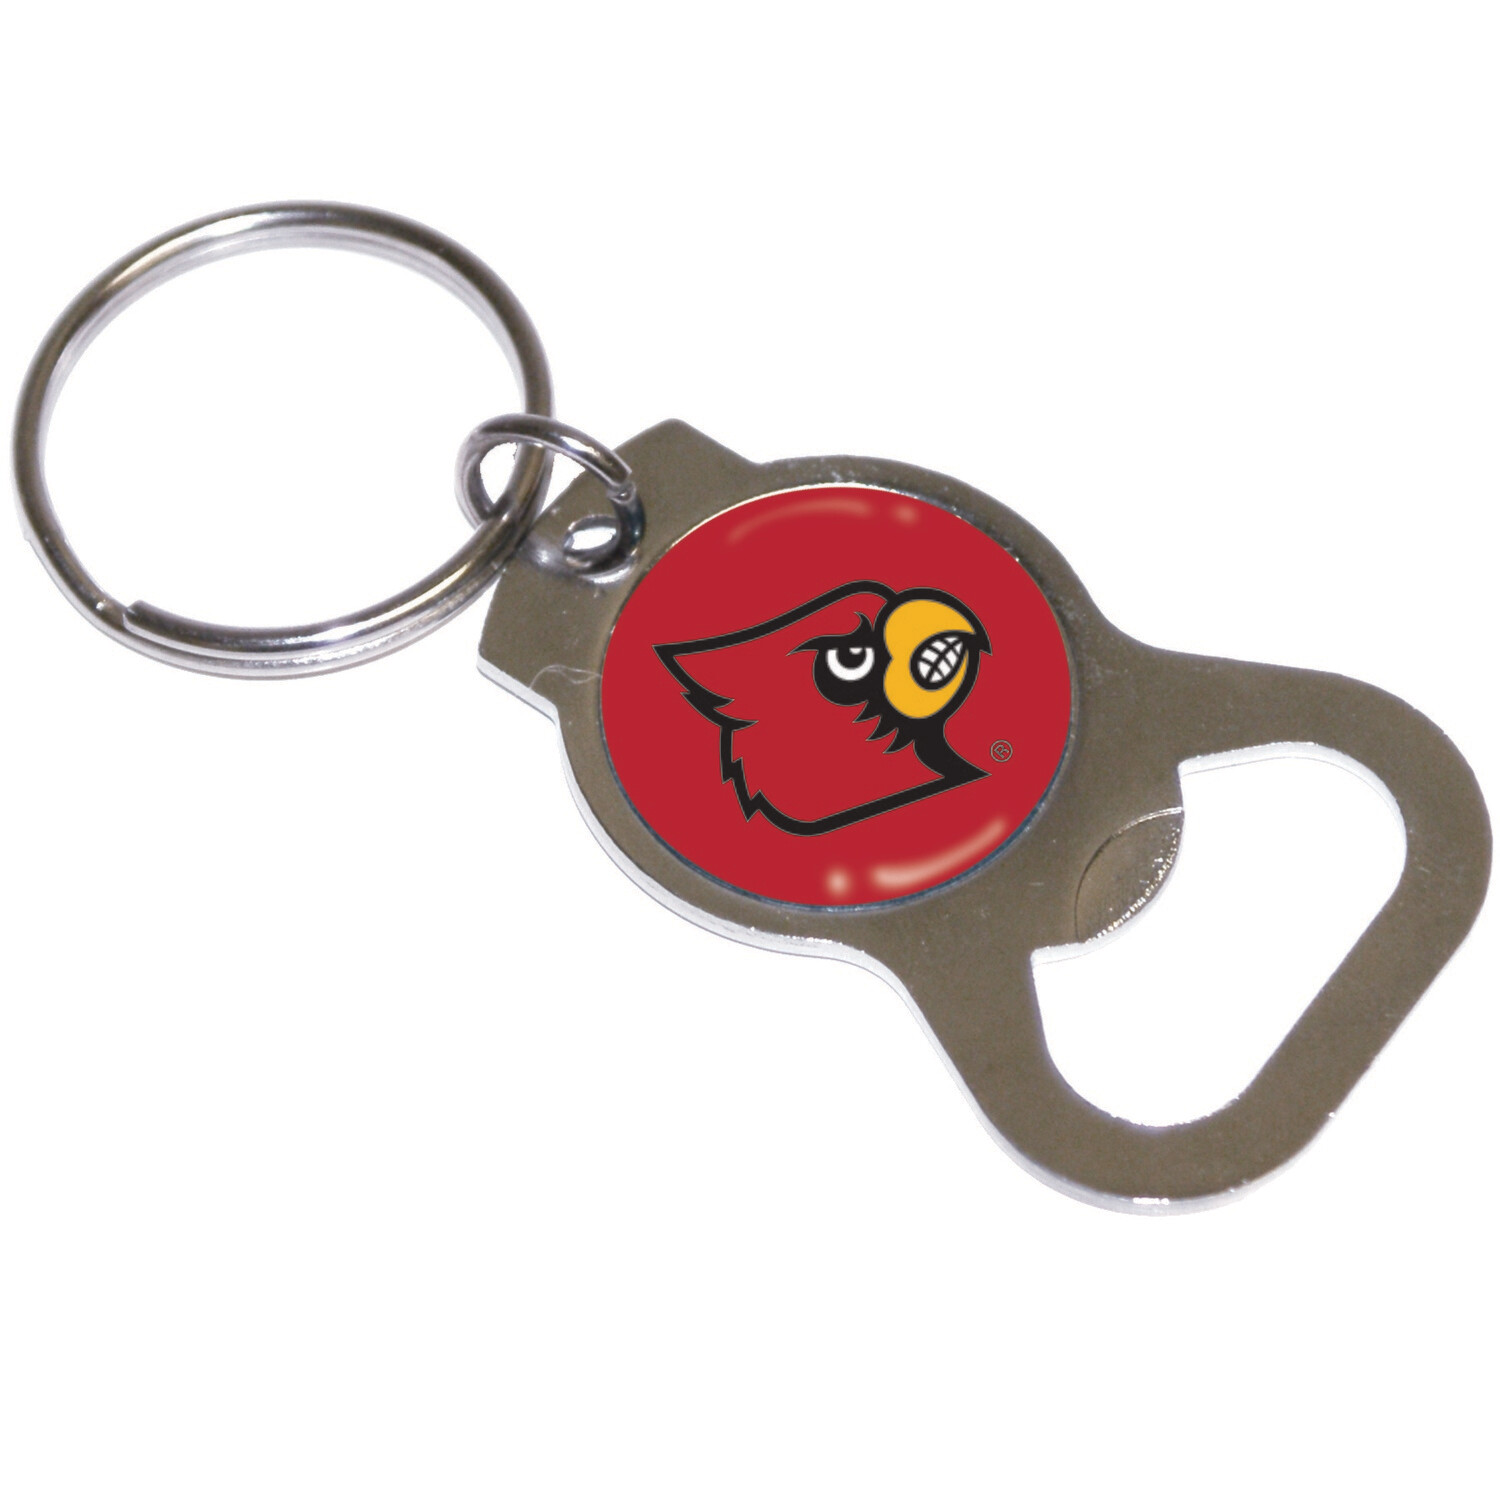 Louisville Cardinals Key Chain